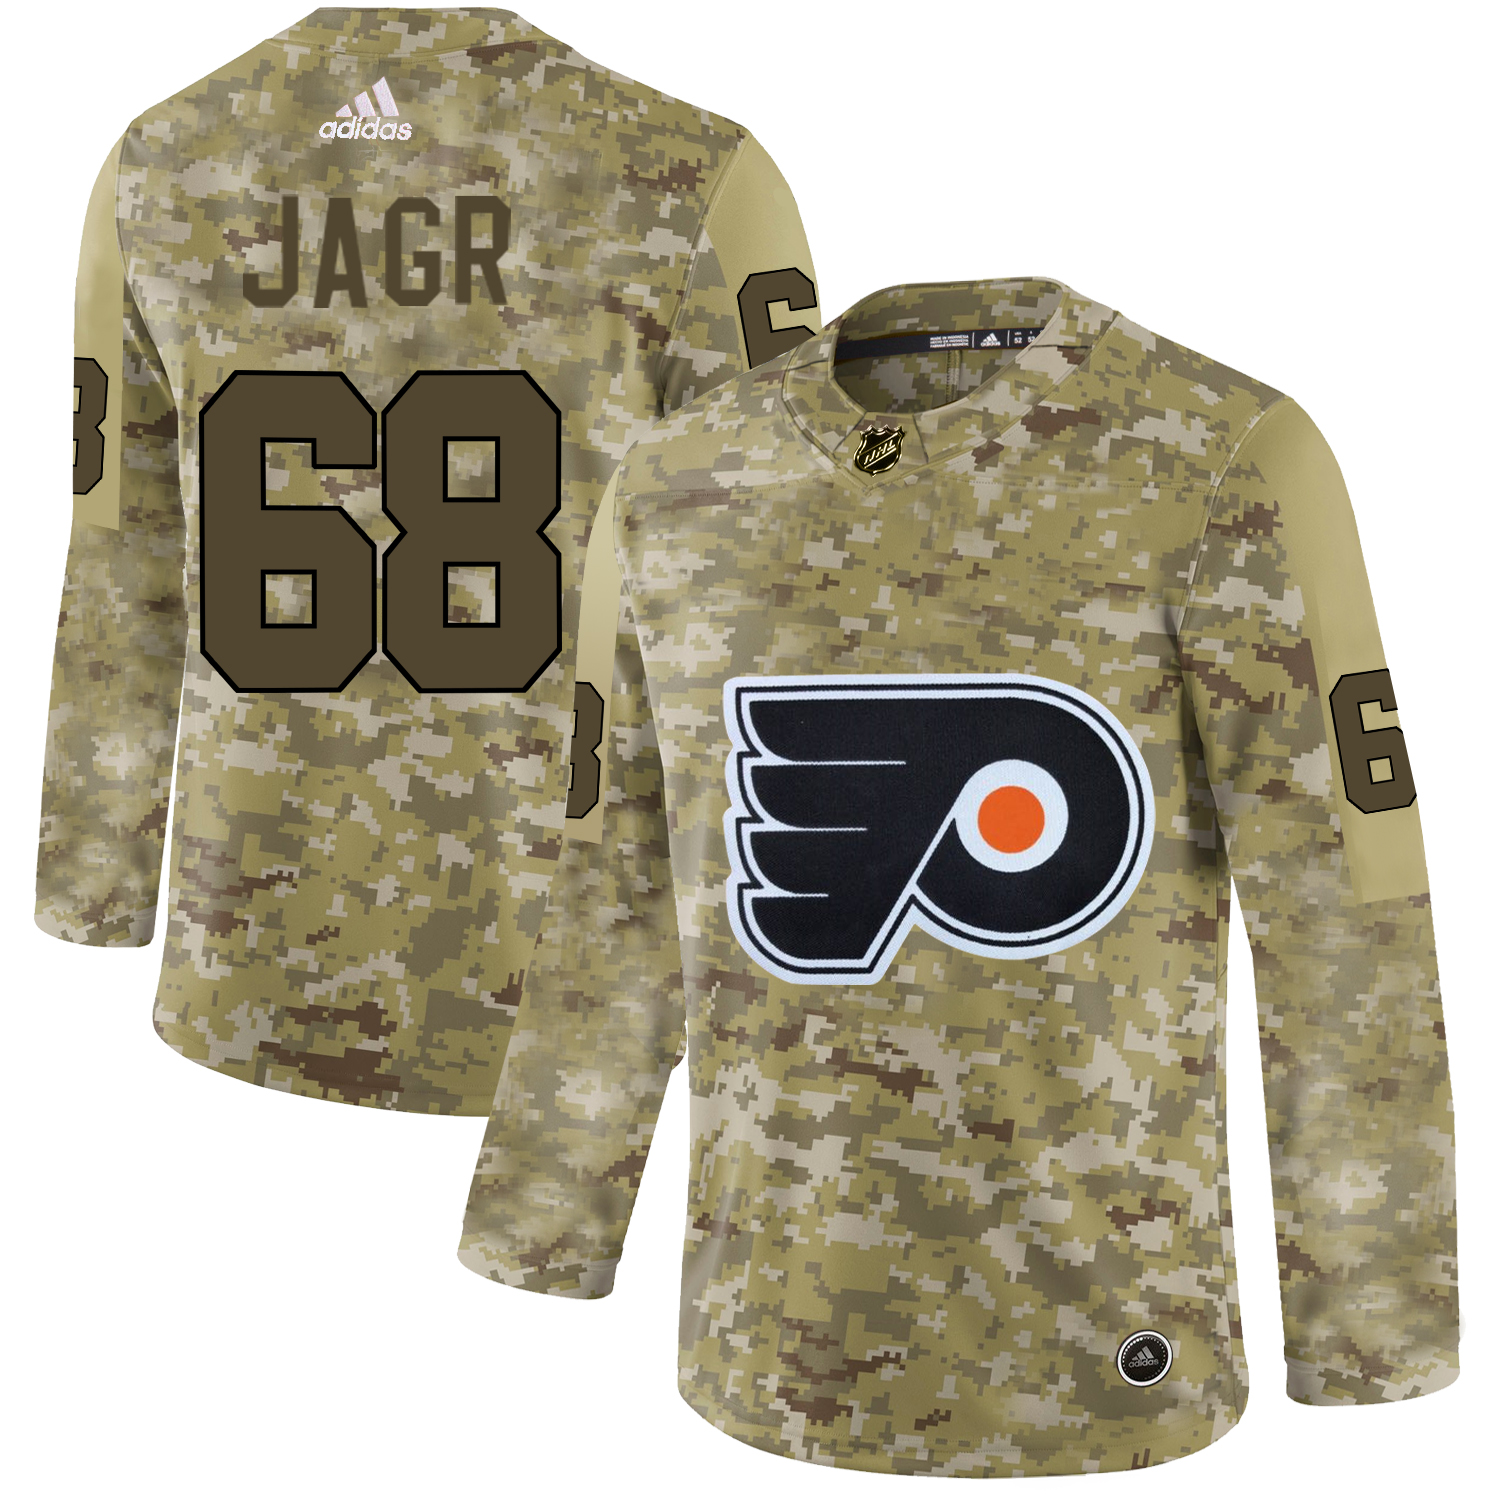 Adidas Flyers #68 Jaromir Jagr Camo Authentic Stitched NHL Jersey